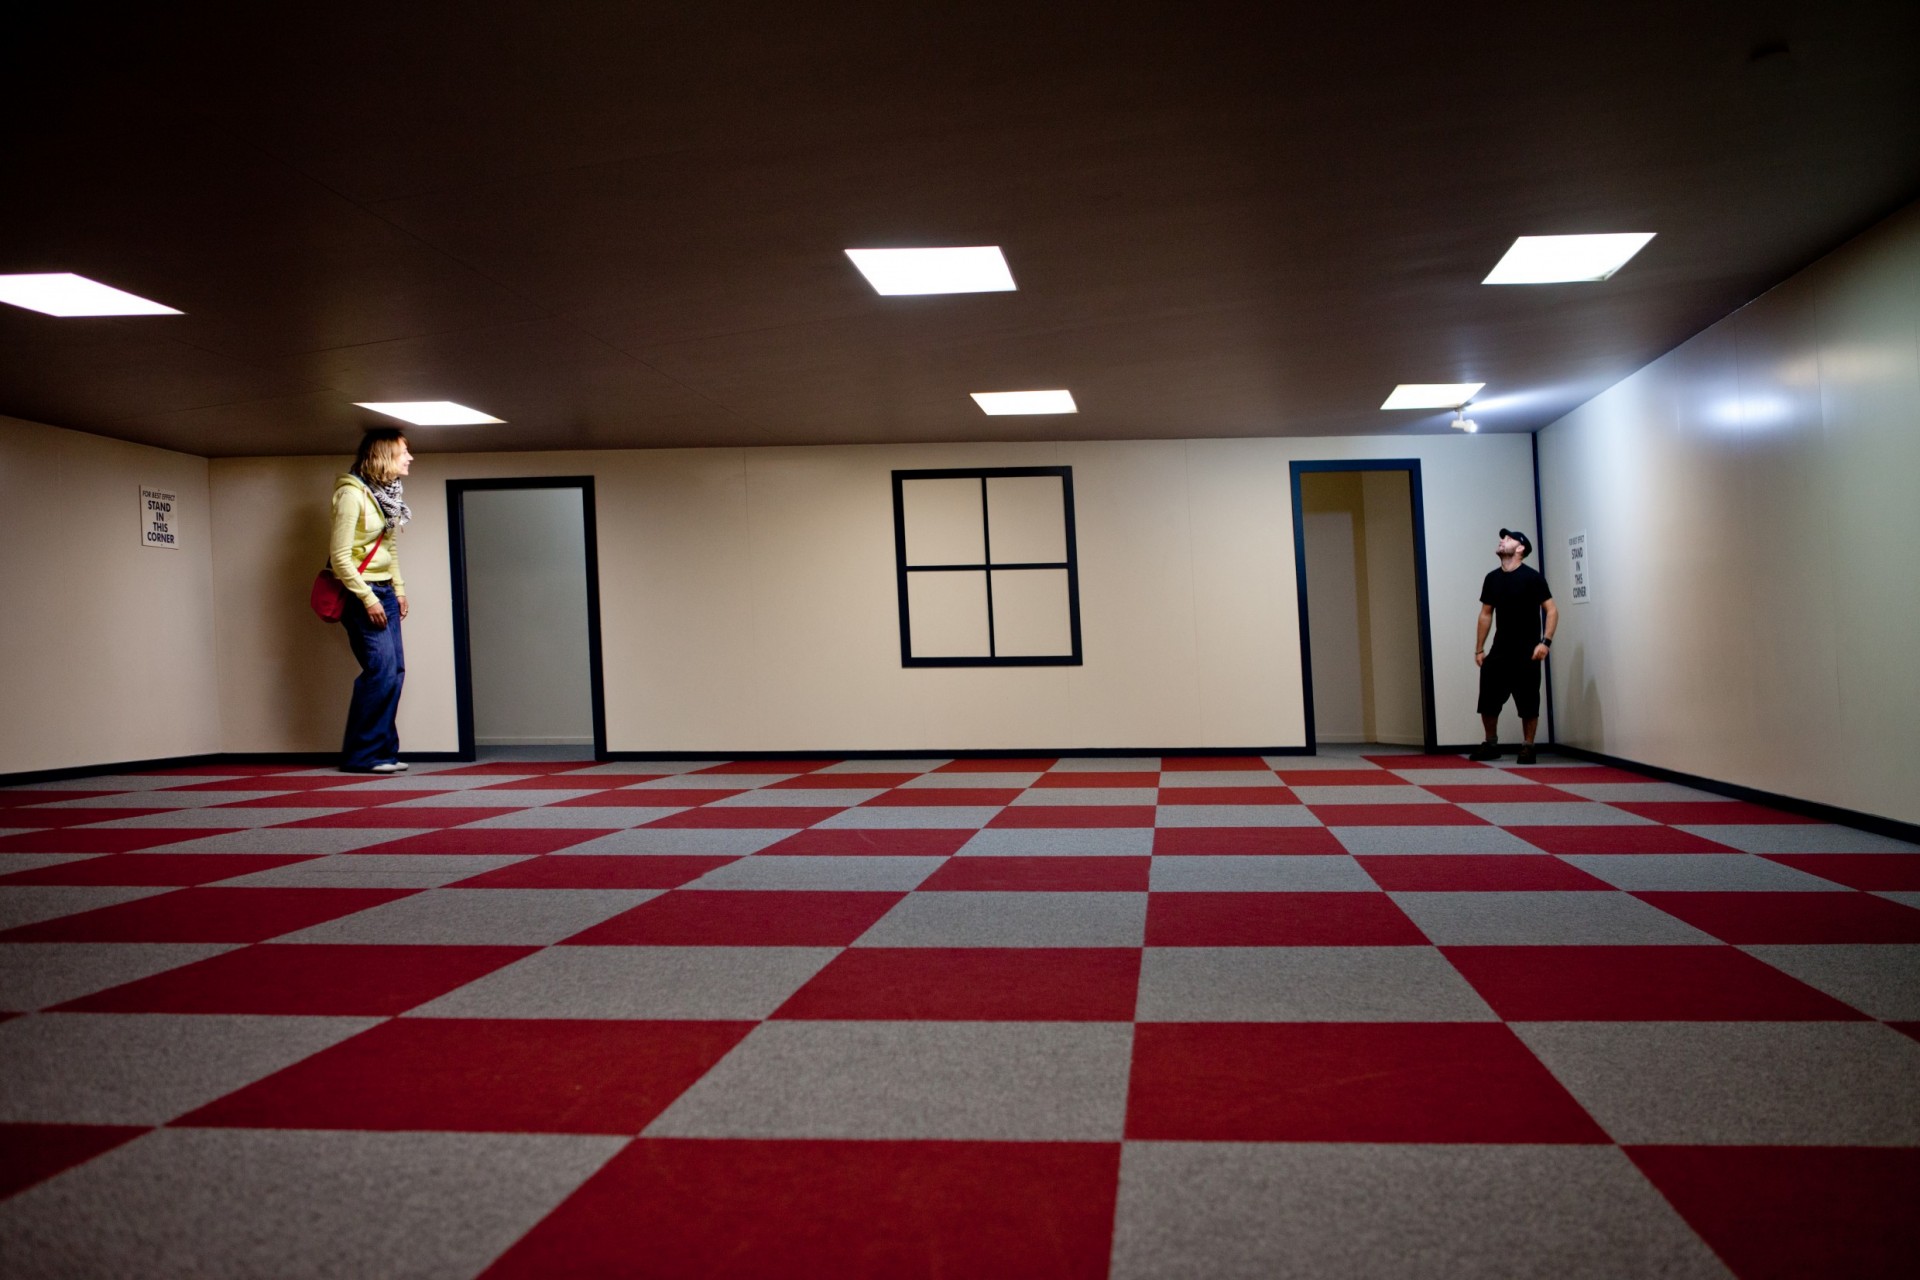 The Ames Illusion Room at Wanaka's Puzzling World. Image courtesy Puzzling World